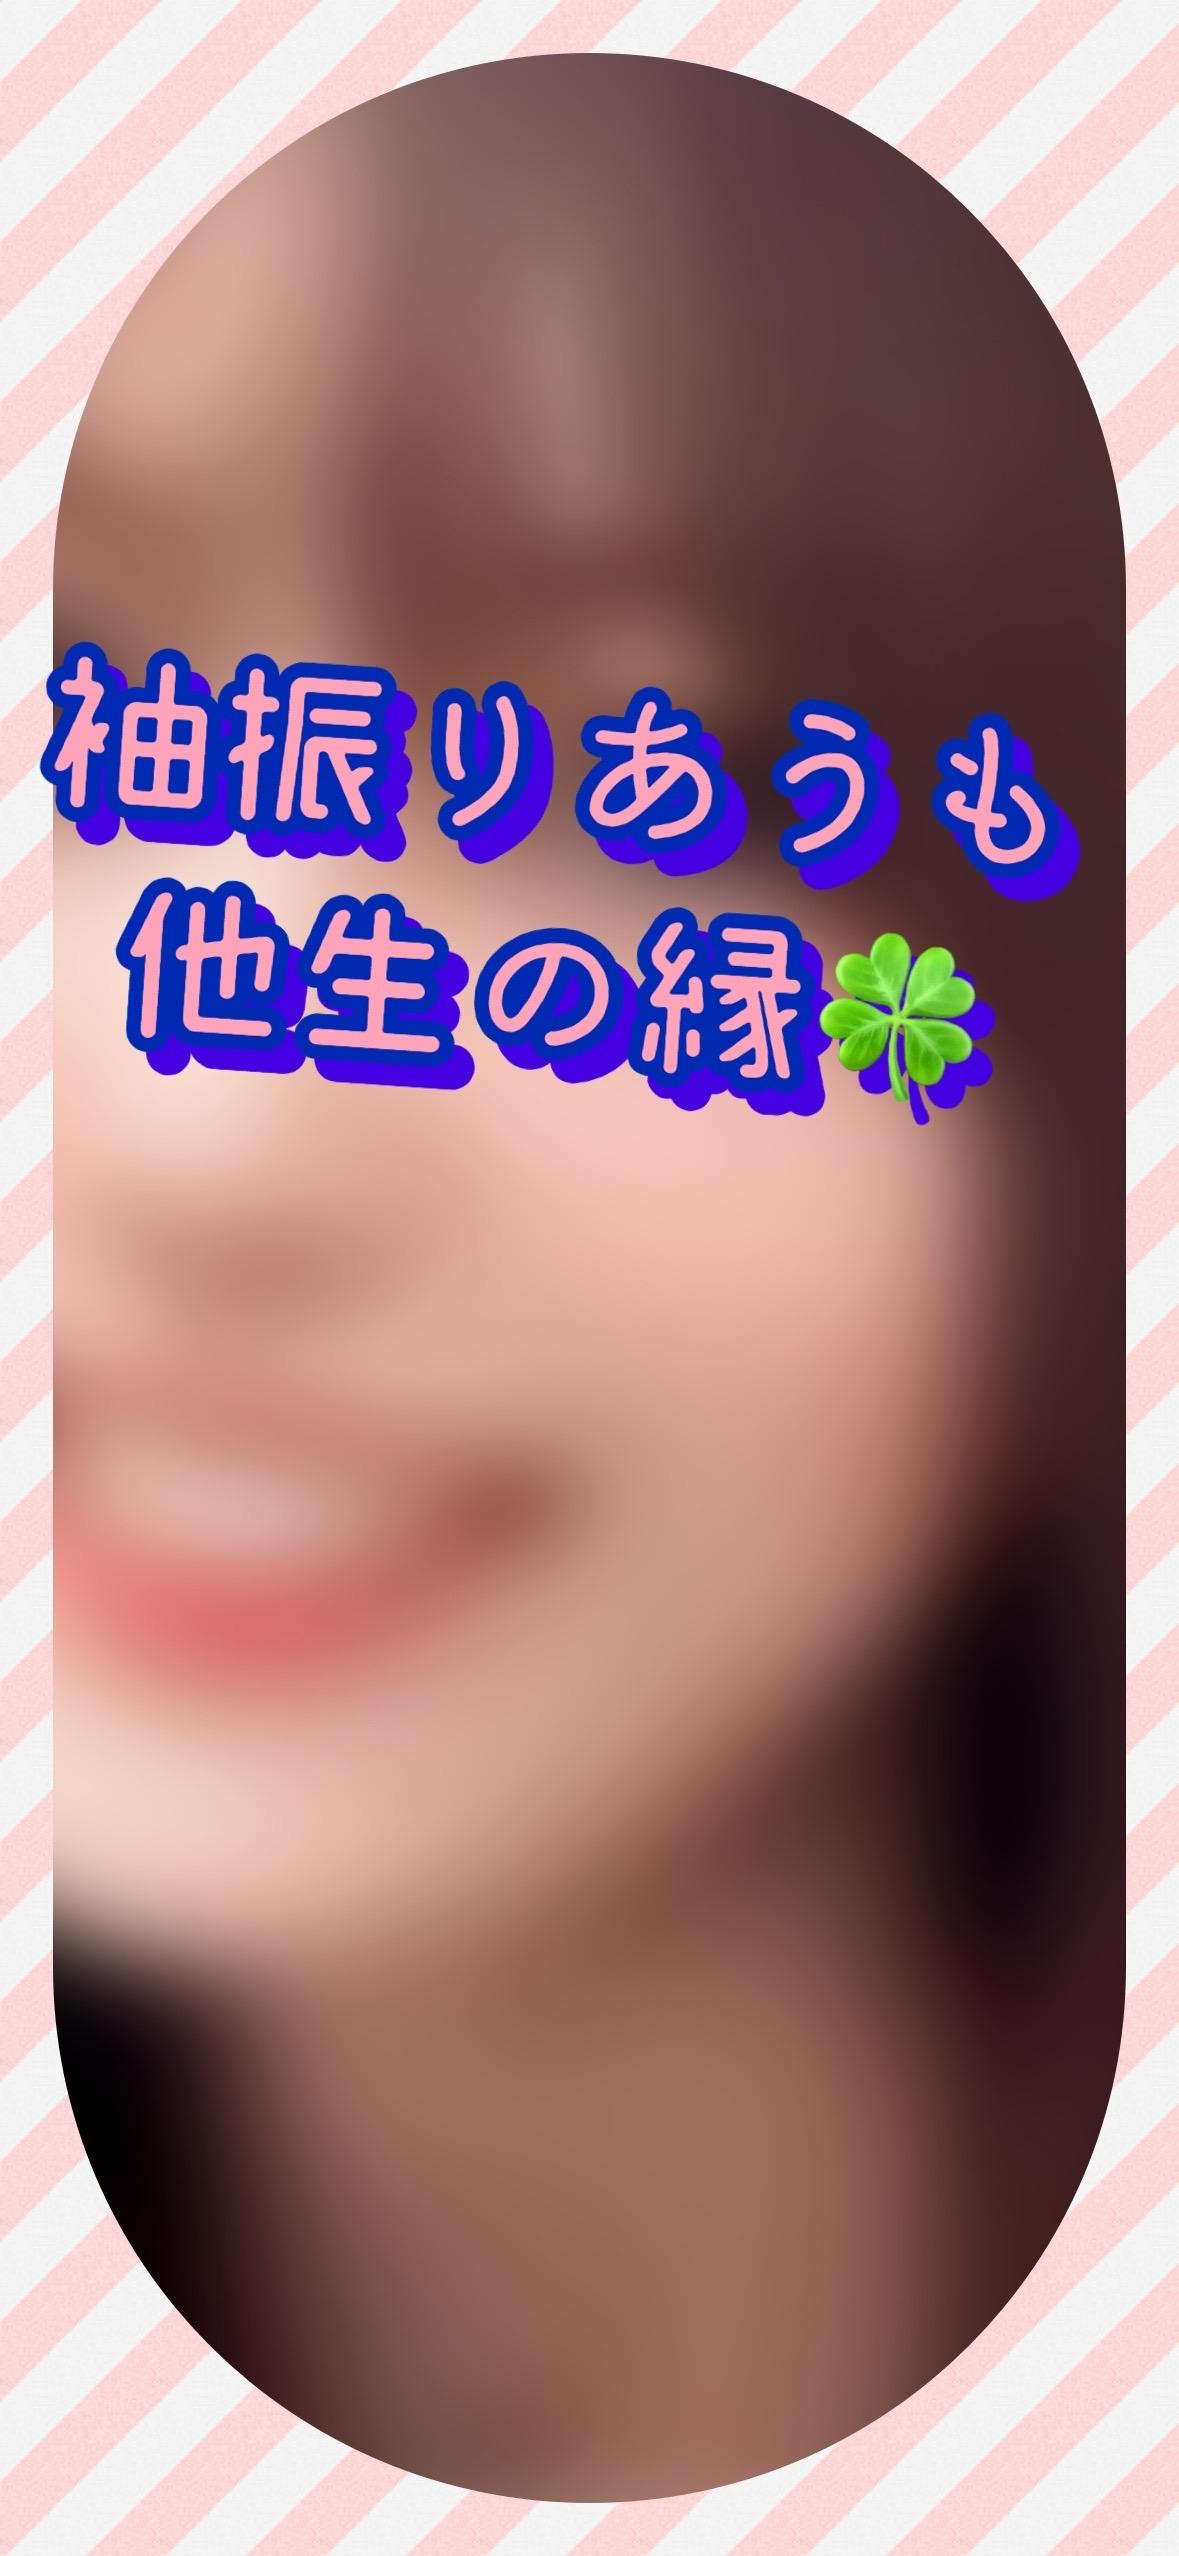 19時〜様<img class="emojione" alt="✨" title=":sparkles:" src="https://fuzoku.jp/assets/img/emojione/2728.png"/>